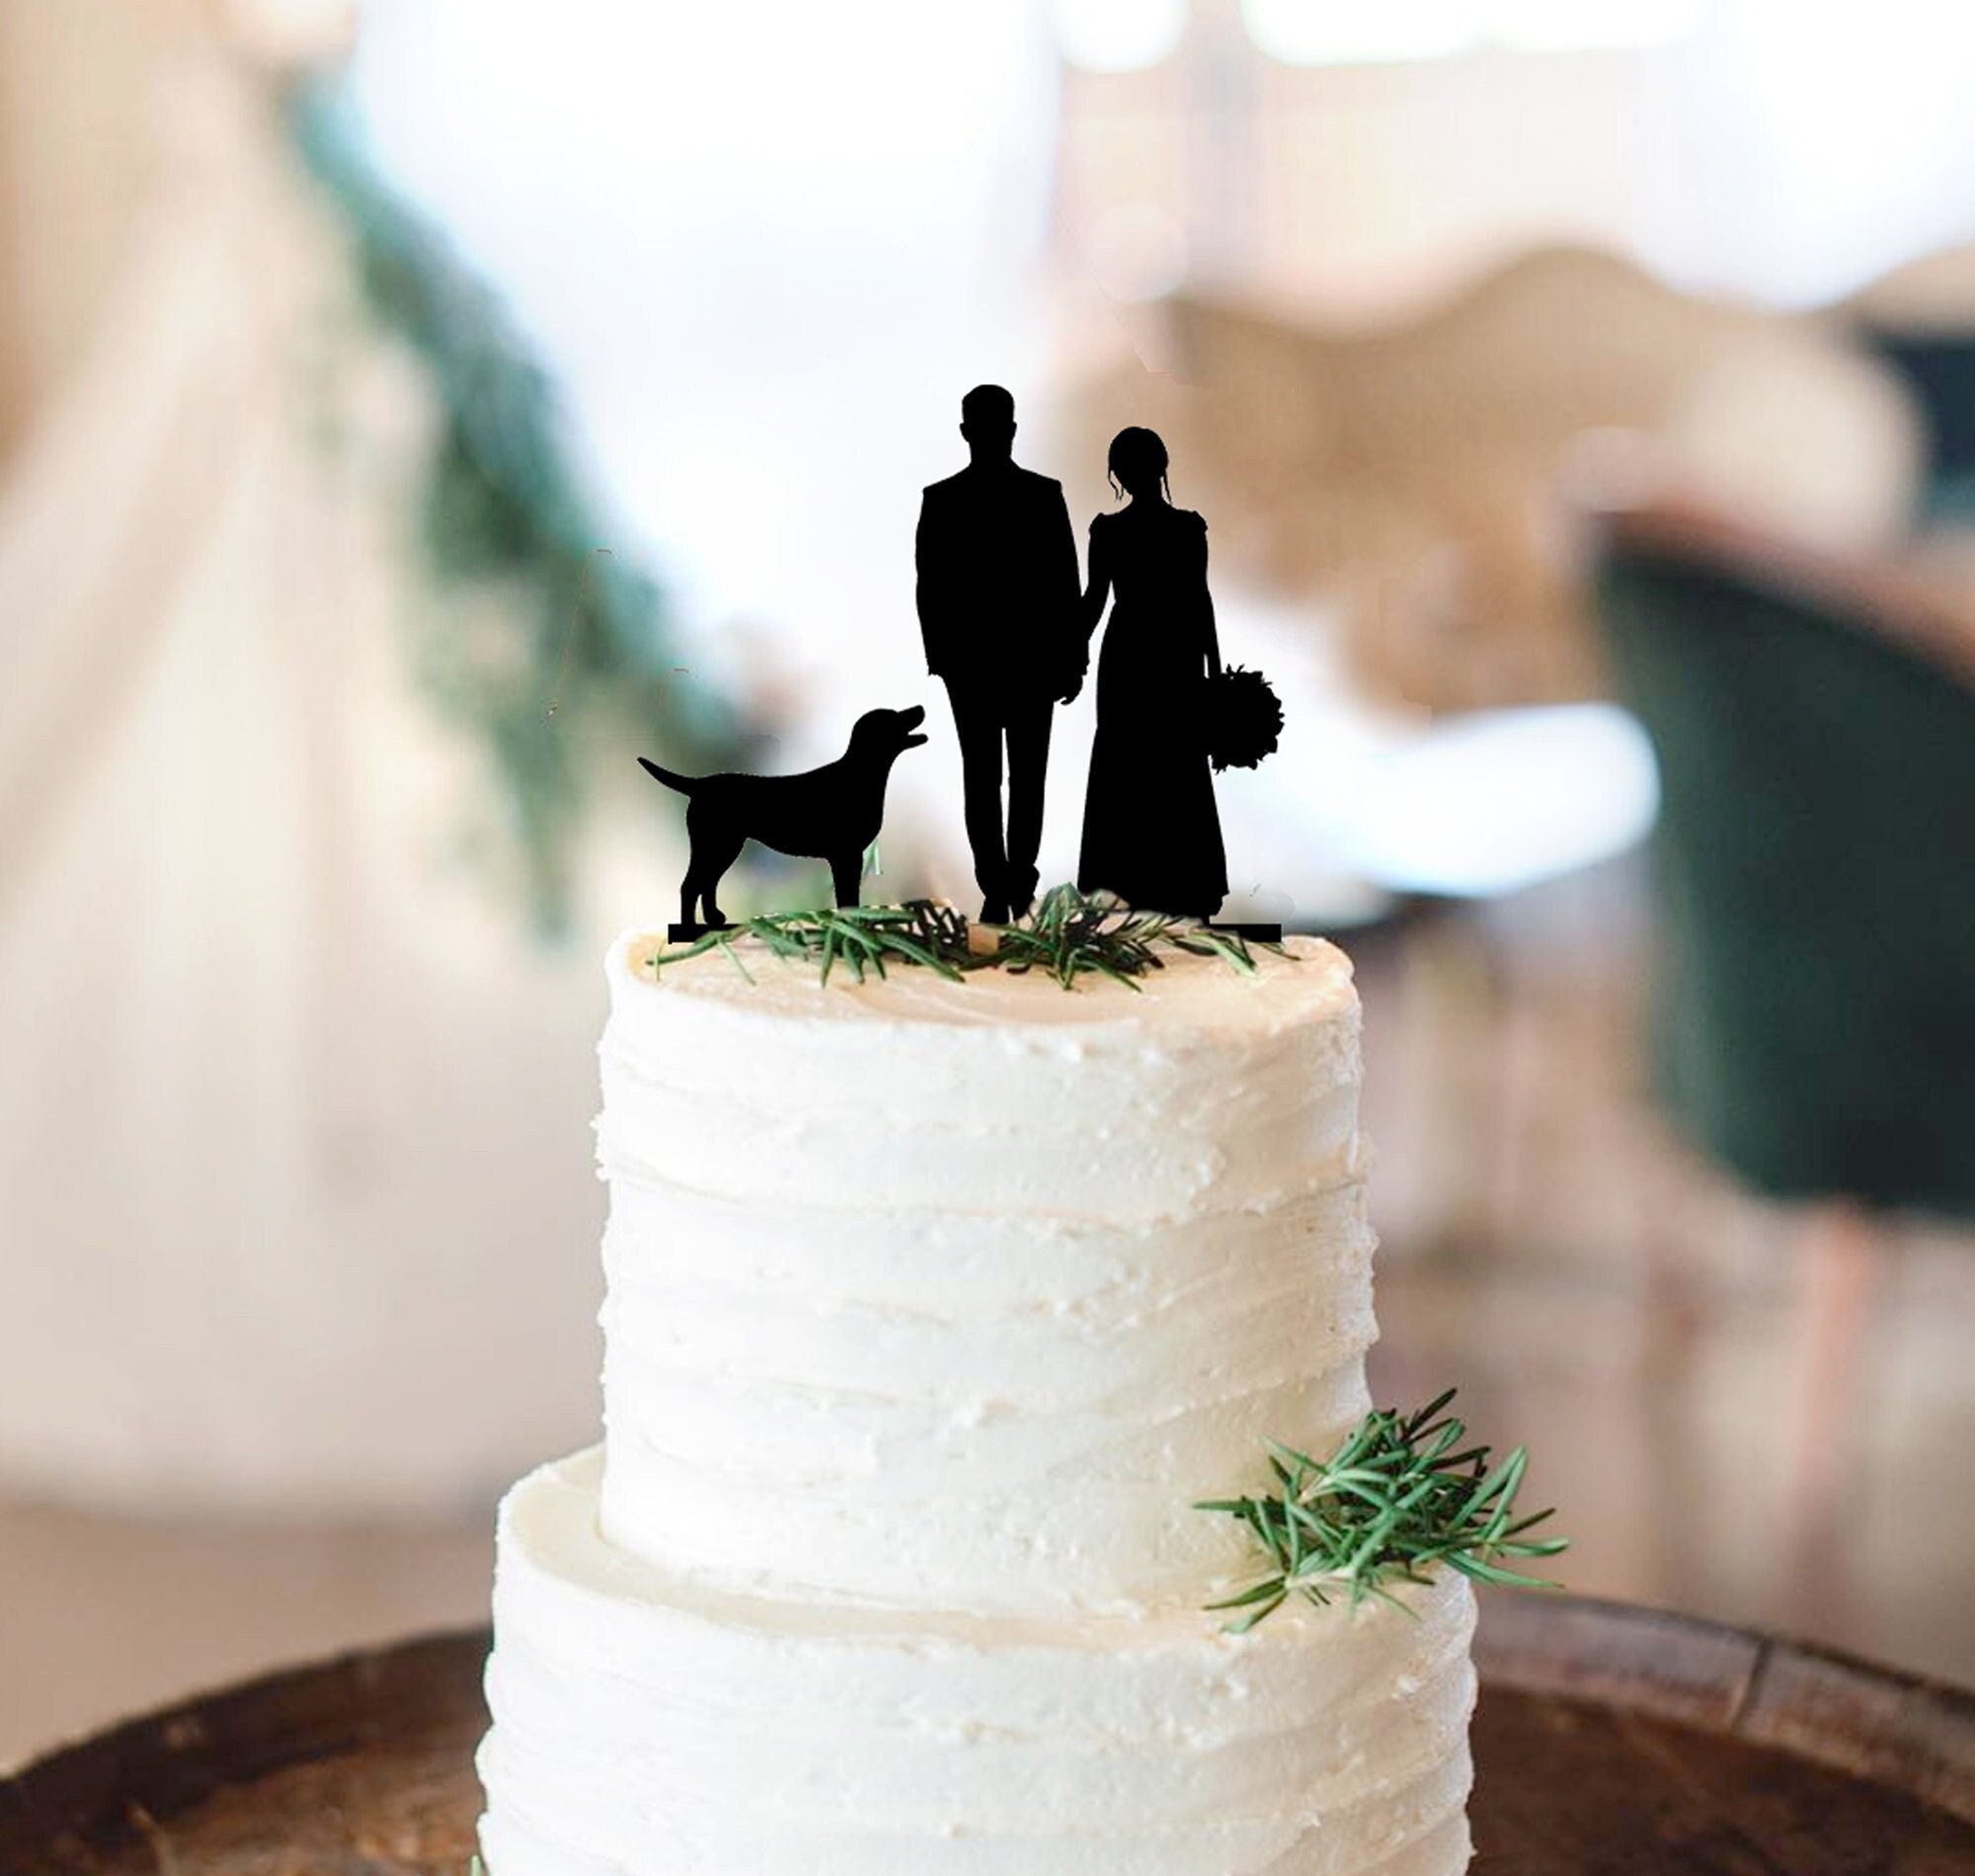 Pet Wedding Wedding Cake Topper with German Shepherd Cake Topper win Dog Bride and Groom Silhouette Wedding Cake Topper with Dog